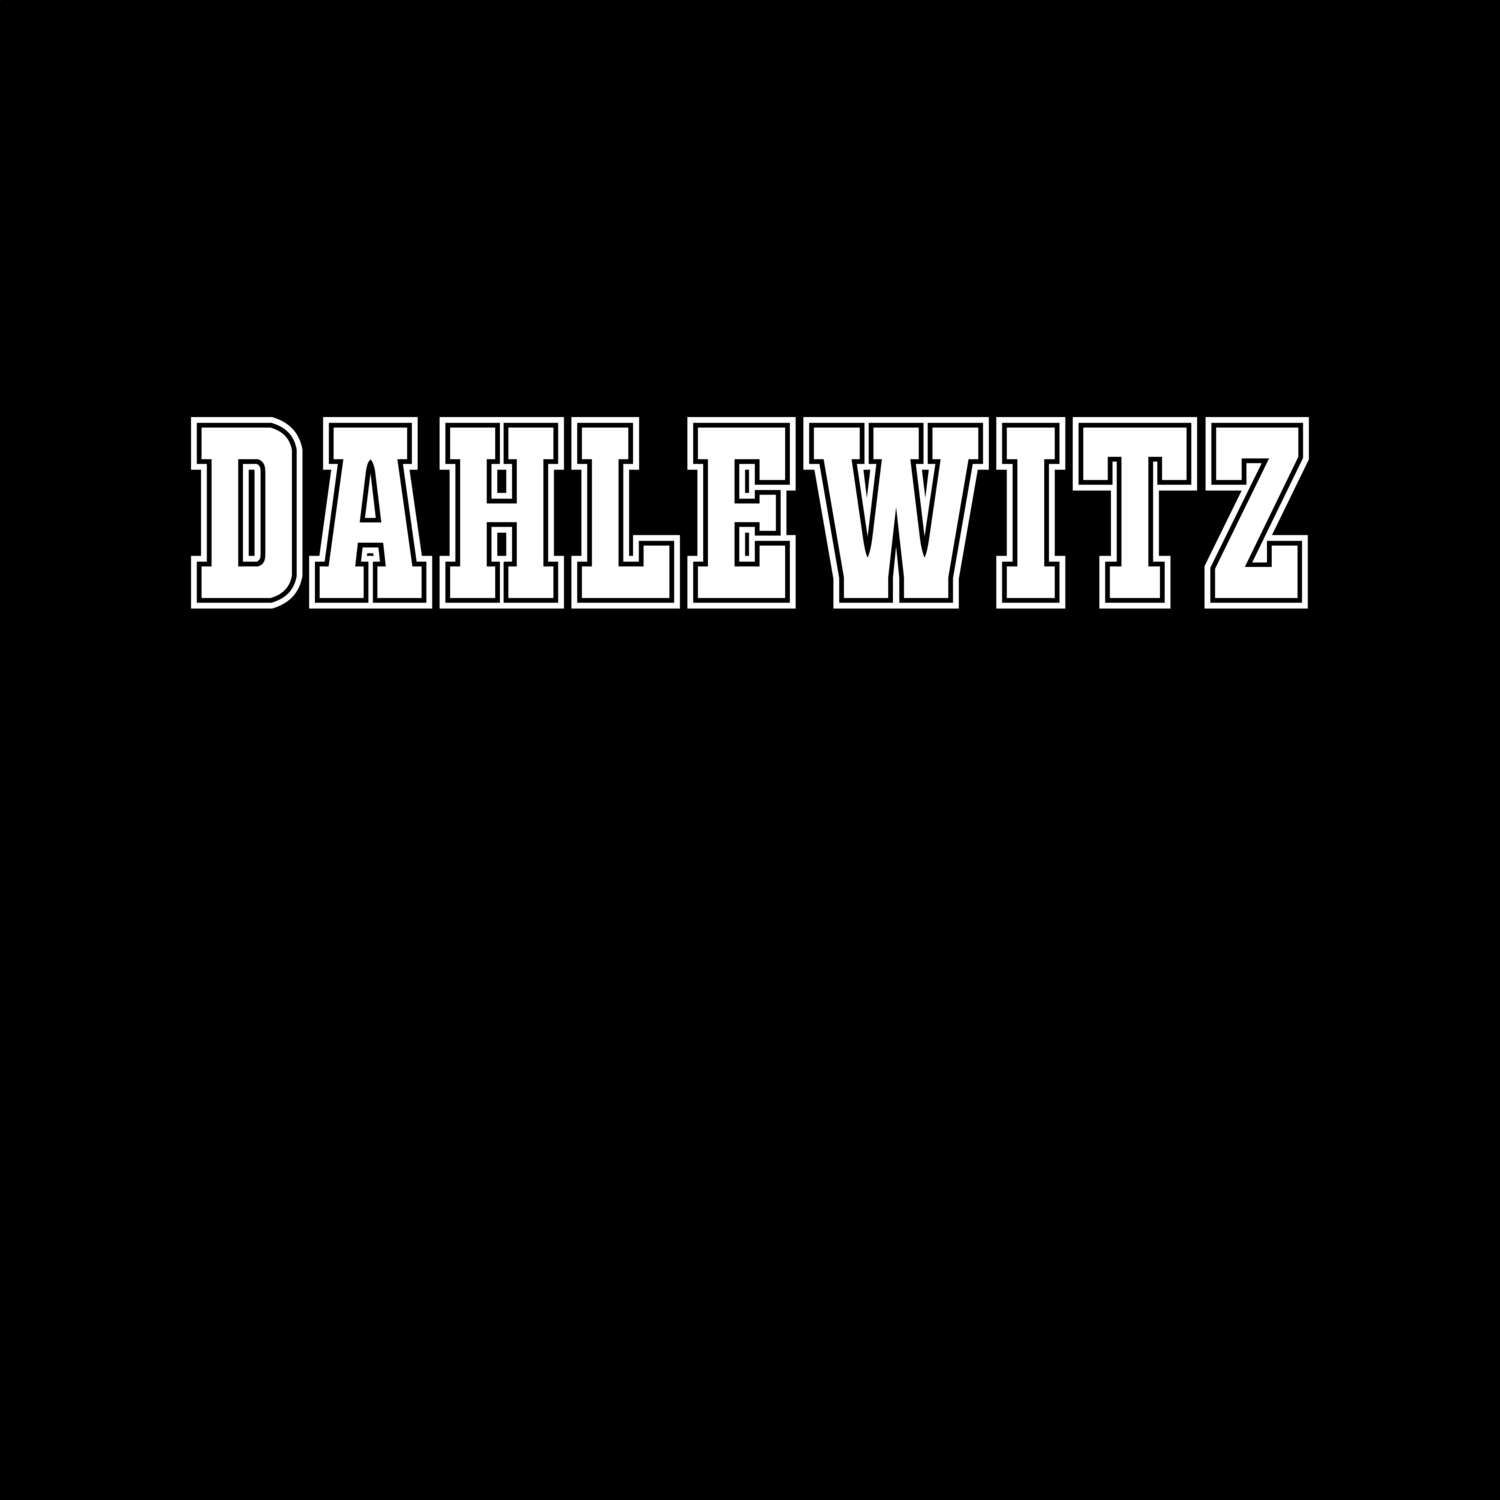 Dahlewitz T-Shirt »Classic«